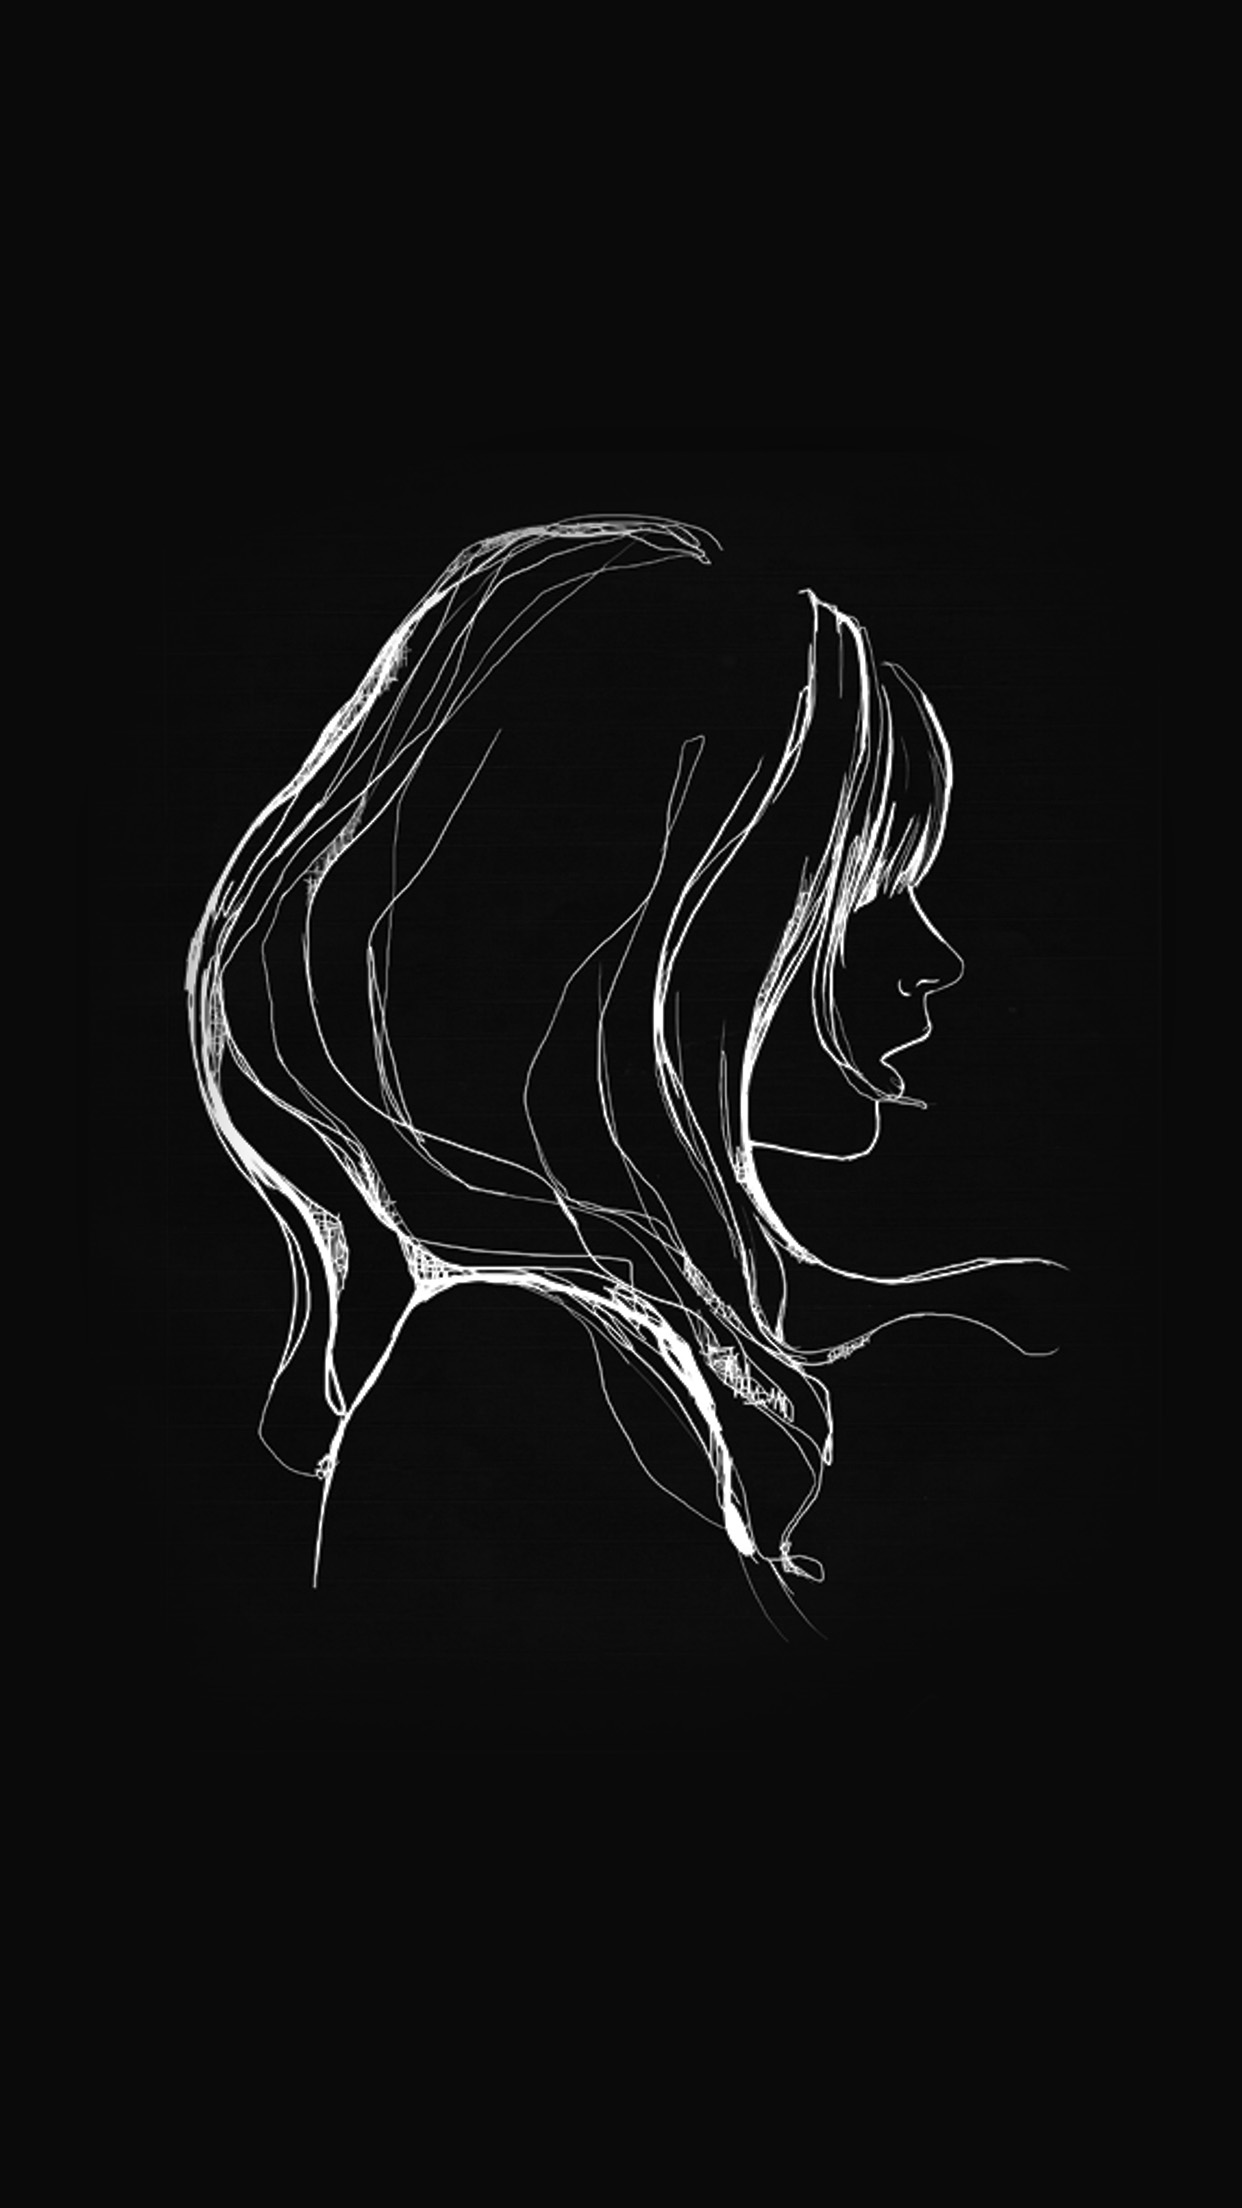 iPhone X wallpaper. drawing simple minimal girl illustration art dark